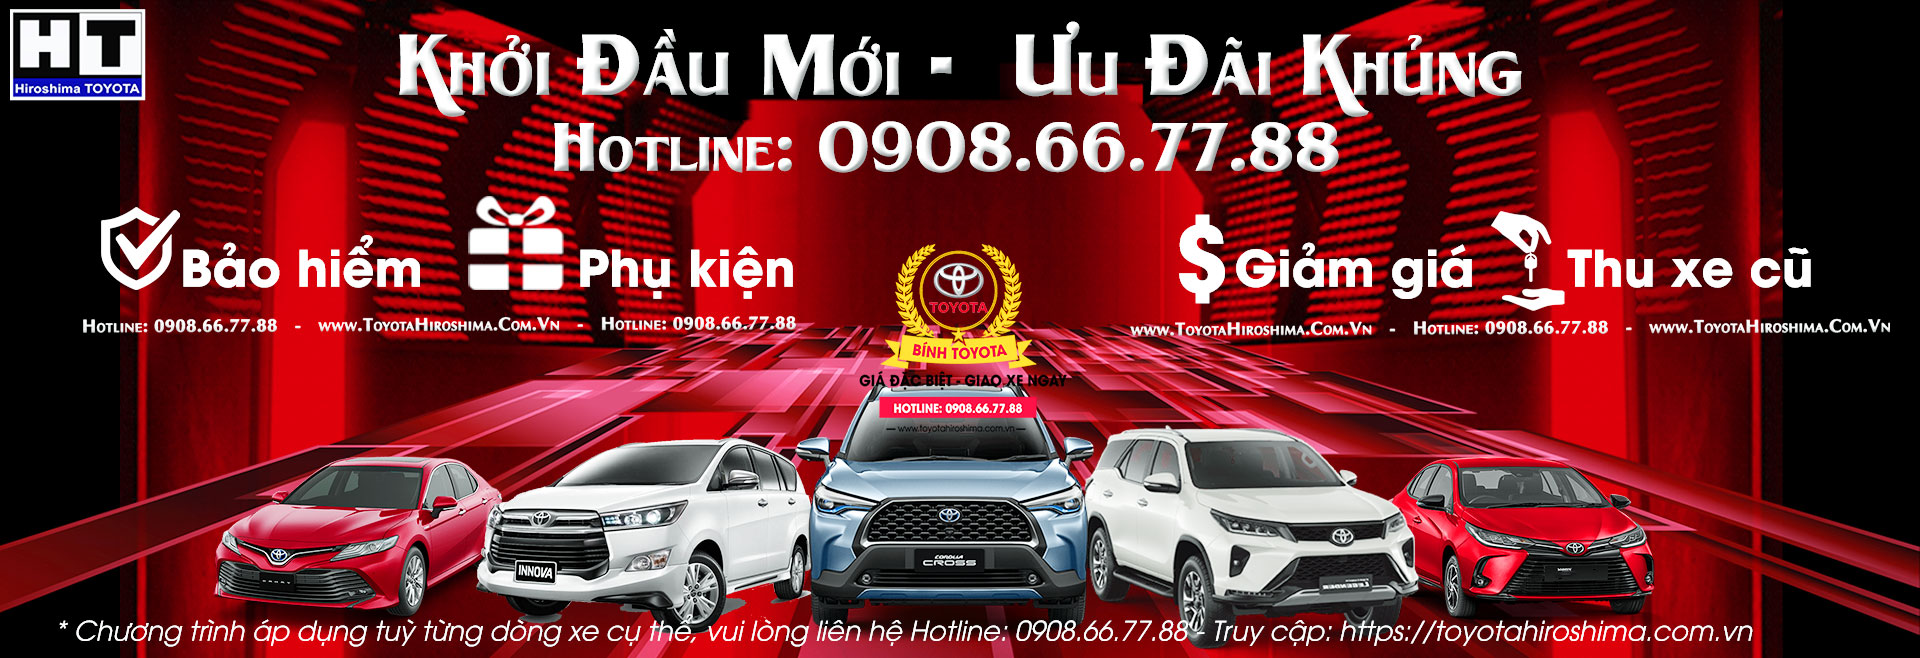 ToyotaHiroshimaTanCang-0908667788-Tin-Tuc-KHuyen-ma-khoi-dau-moi-uu-dai-khunng